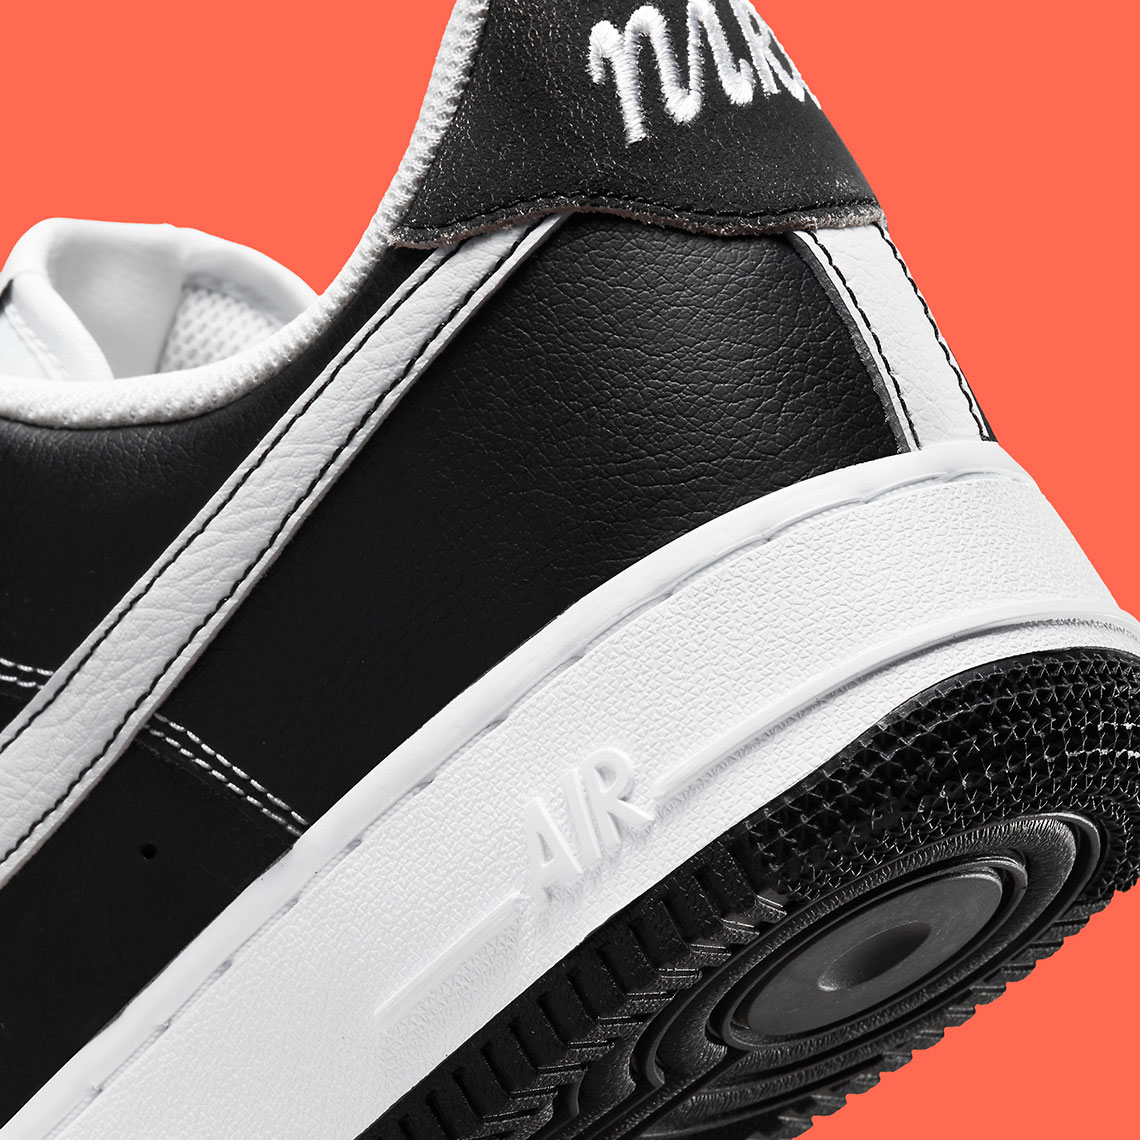 Nike Air Force 1 First Use Black White DA8478-001 |SneakerNews.com